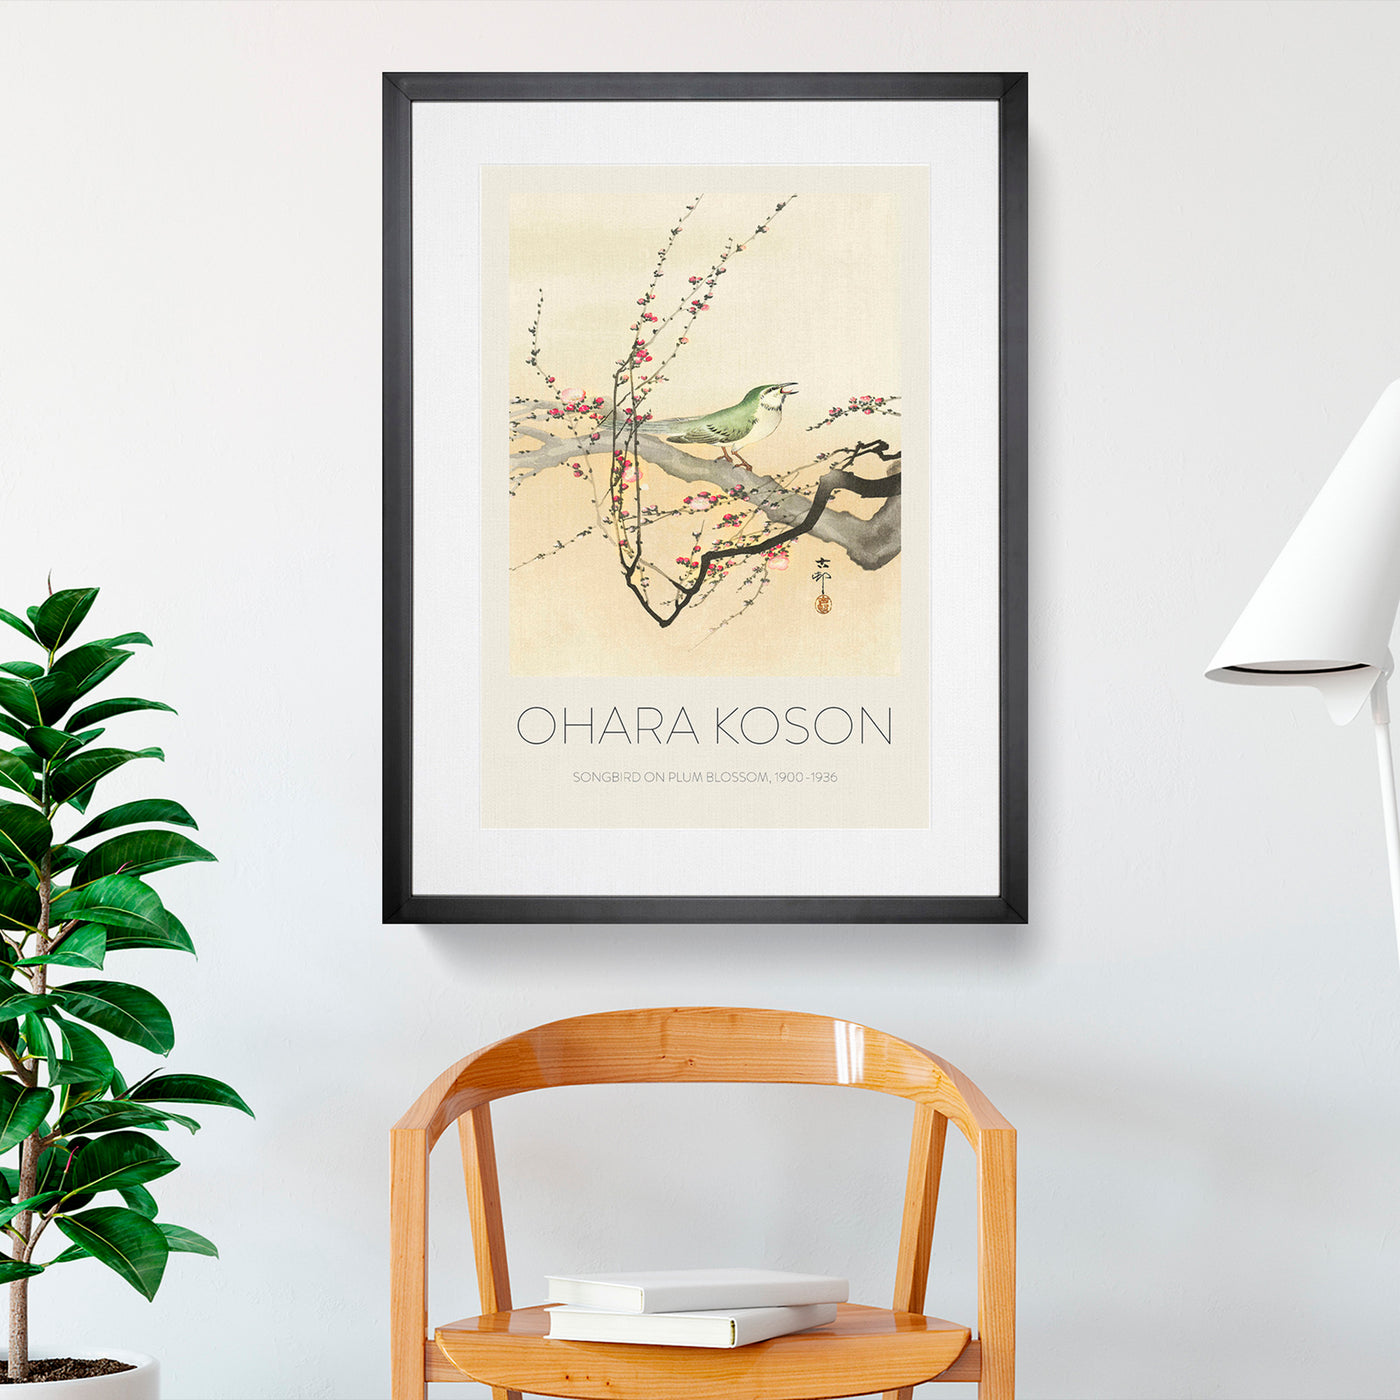 Songbird In A Plum Blossom Tree Print By Ohara Koson